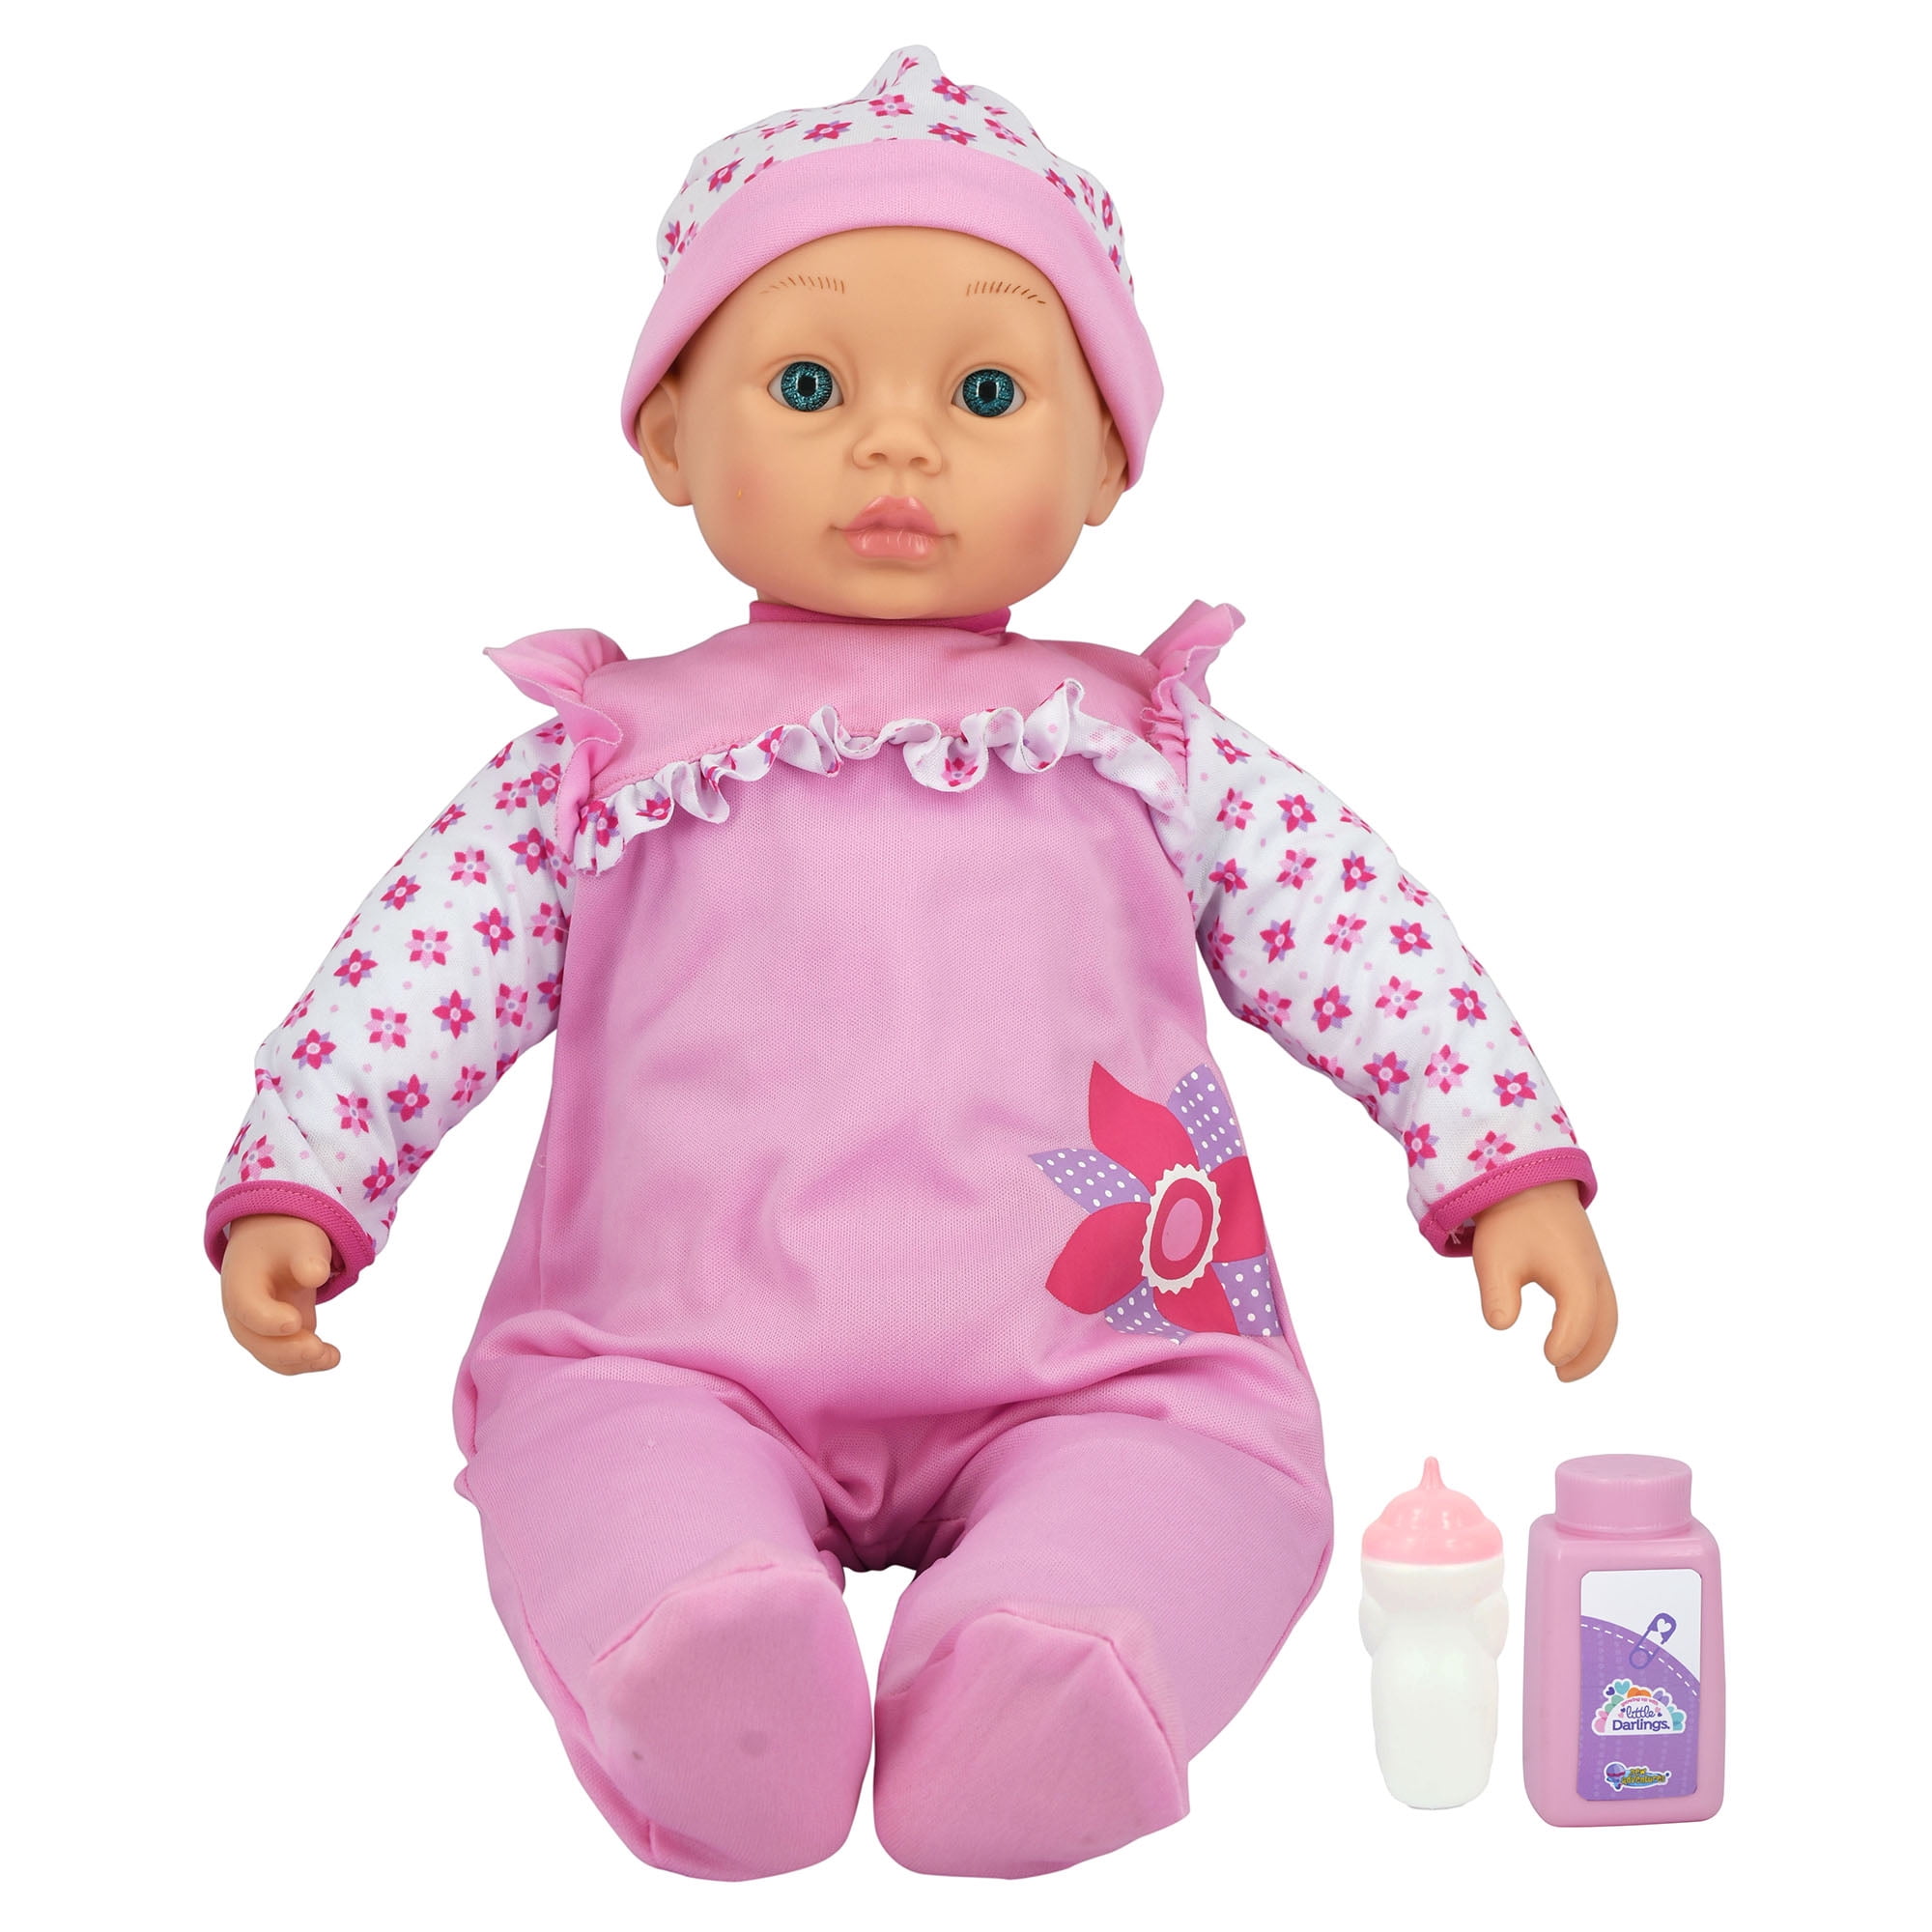 Bar Forbandet overvældende Little Darlings - 19 Inch Cuddle Baby with Accessories, Pink - Walmart.com